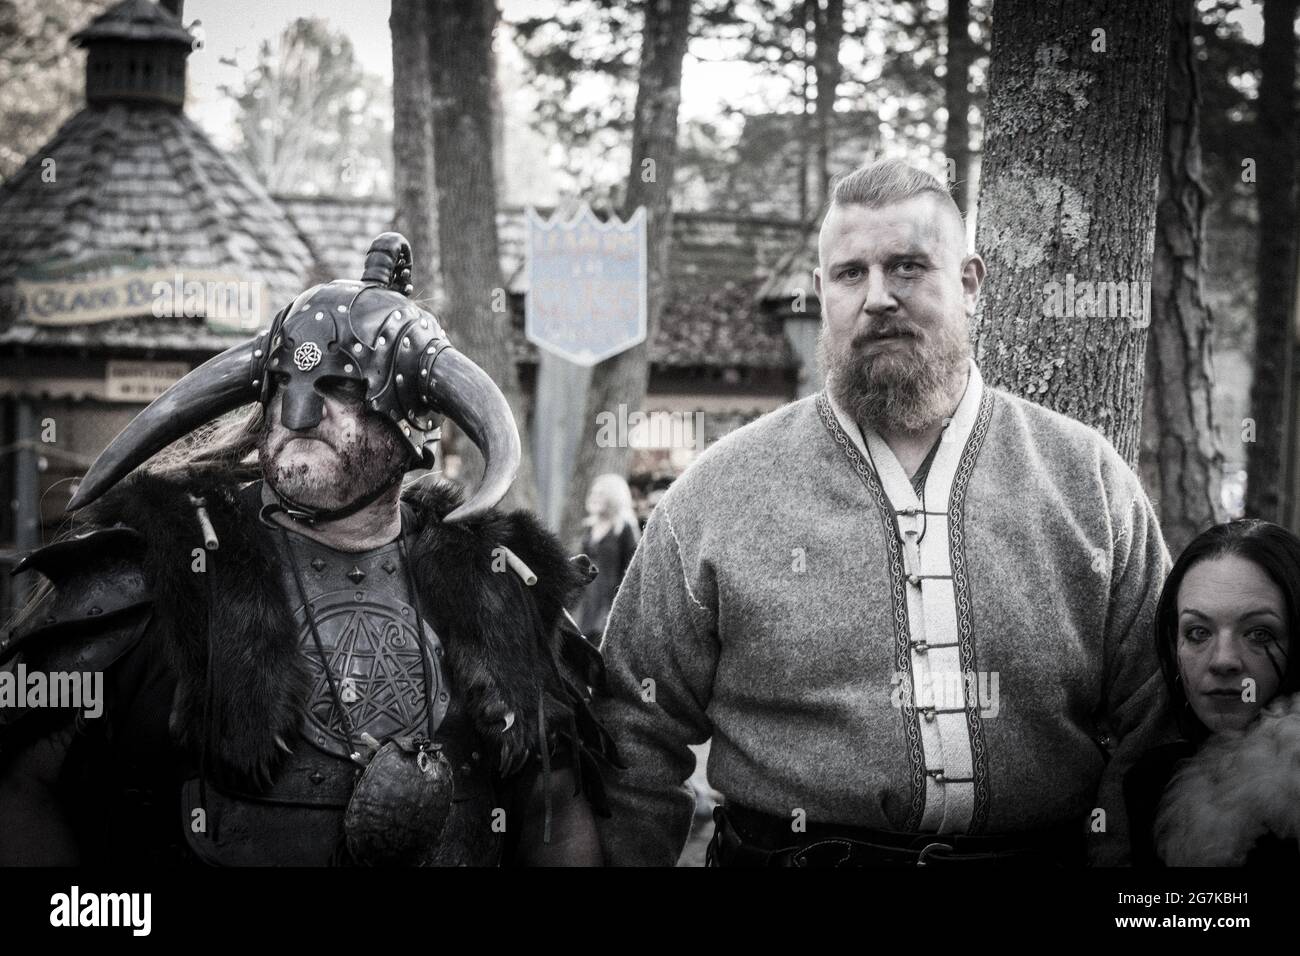 Viking raiders at the Huntersville NC Renaissance Festival Stock Photo